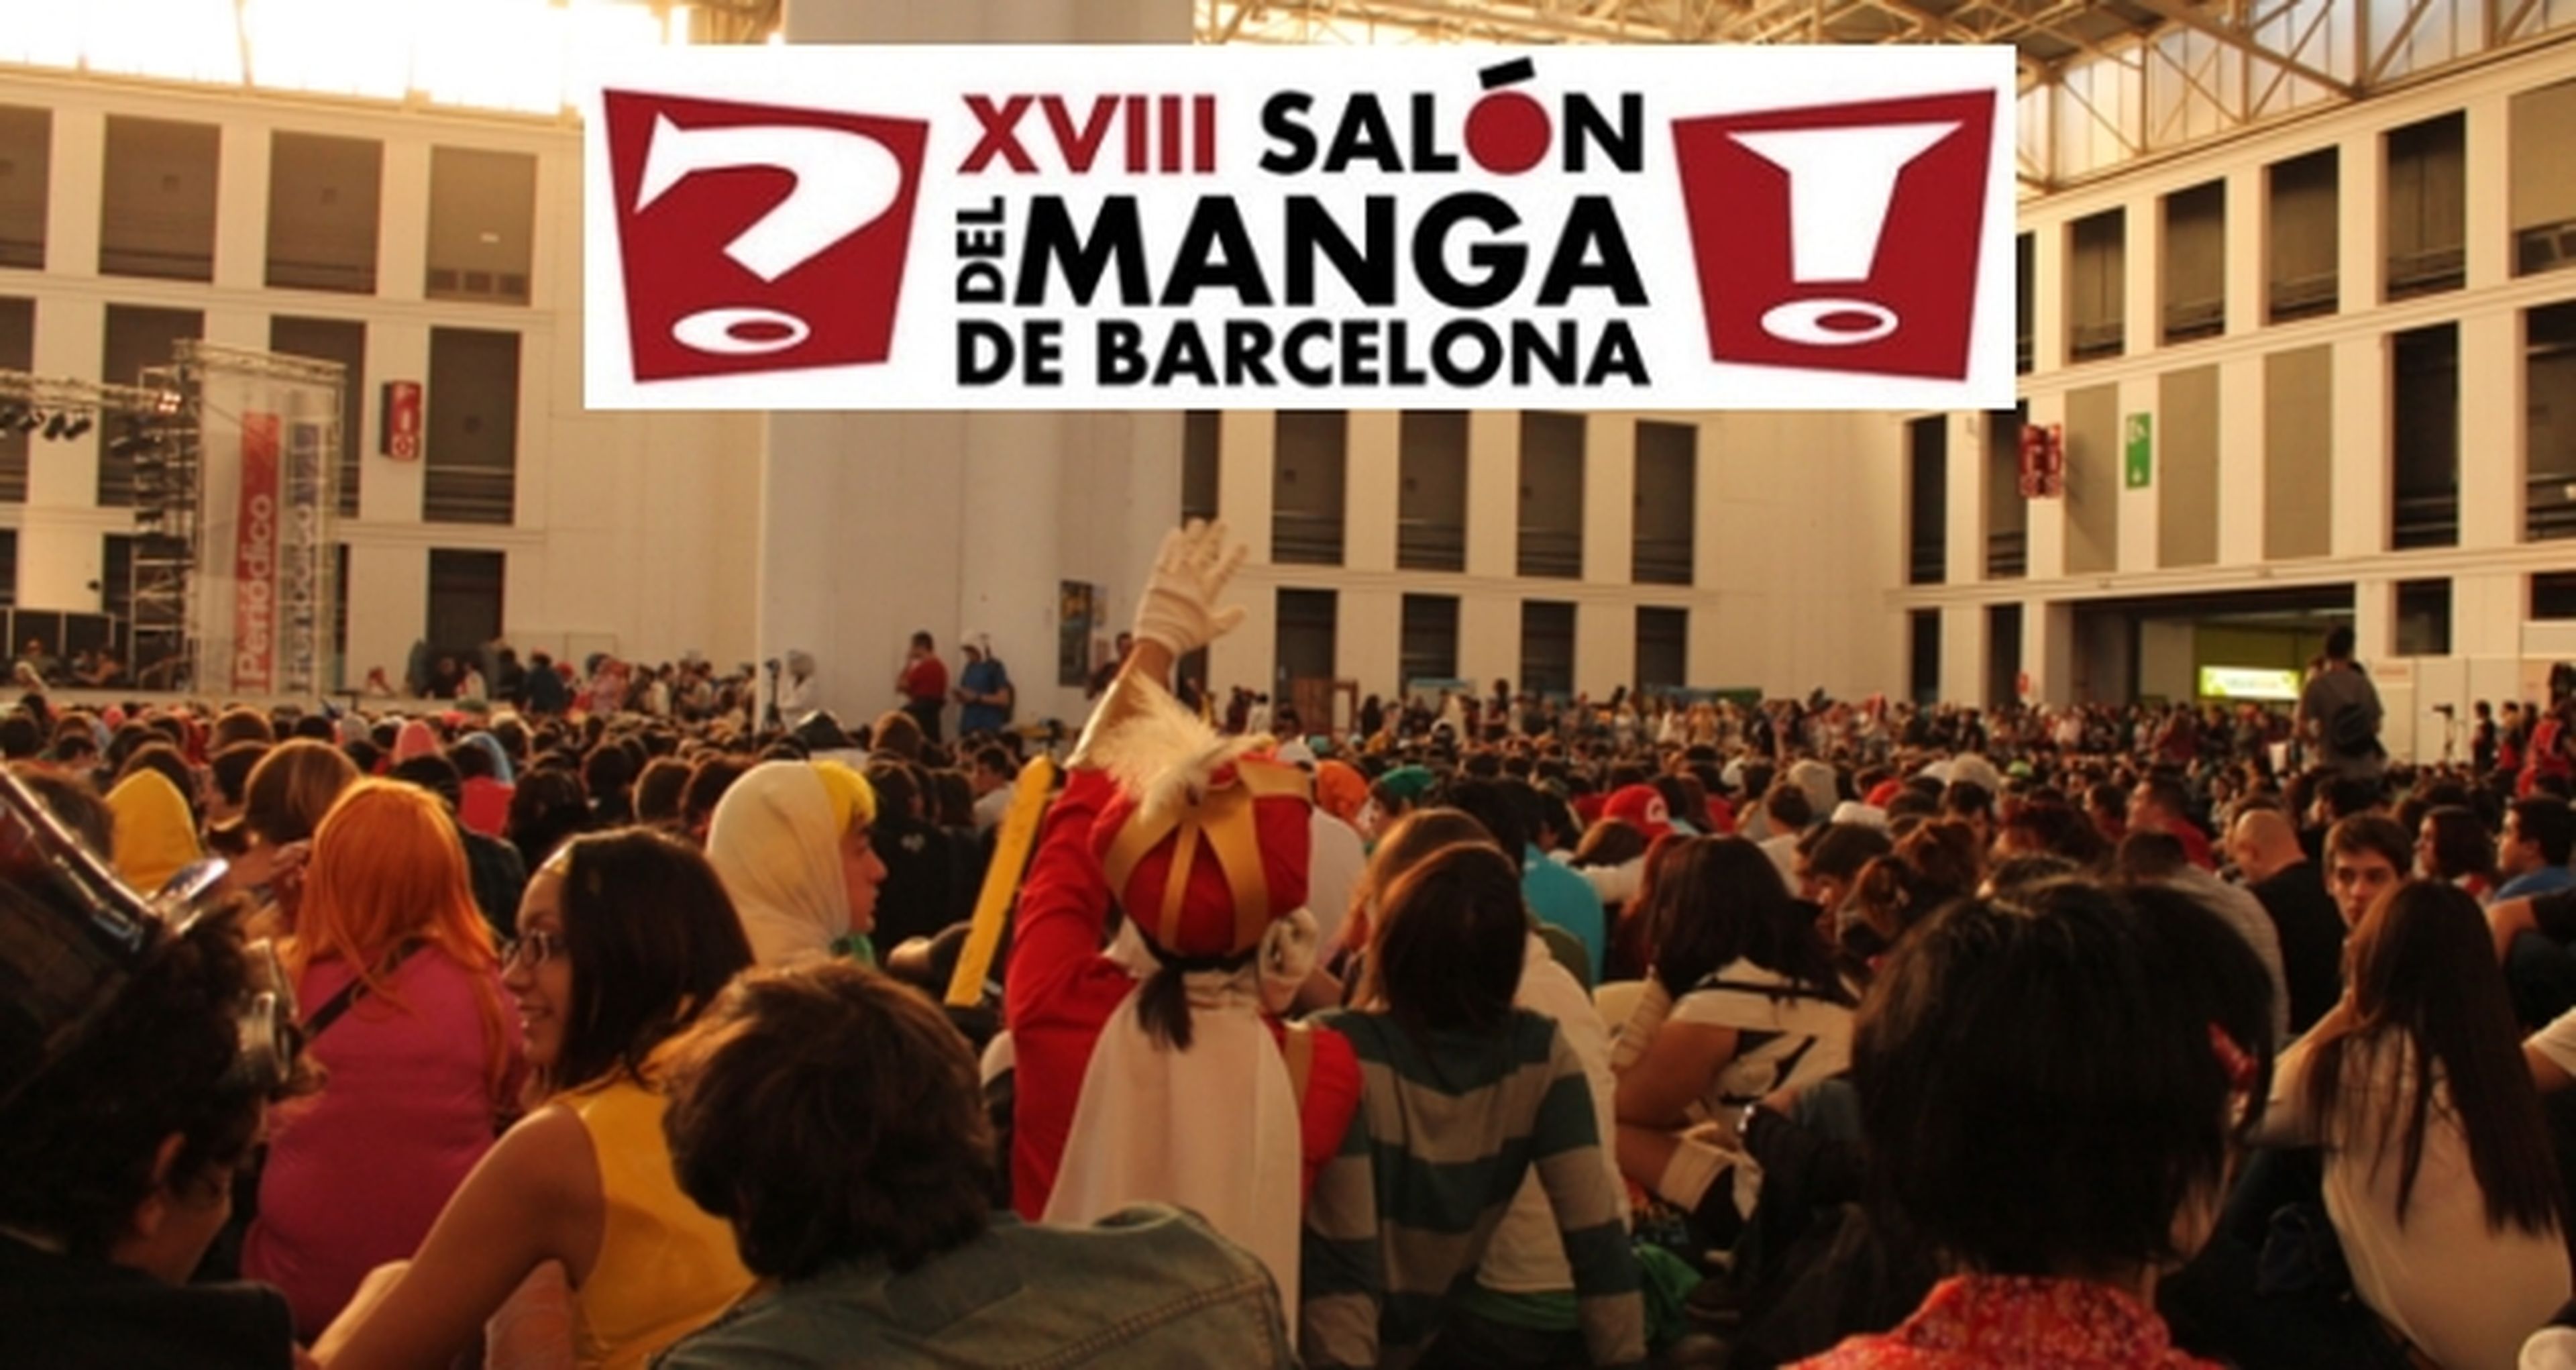 FICOMIC: XVIII Salón del Manga de Barcelona: día 2